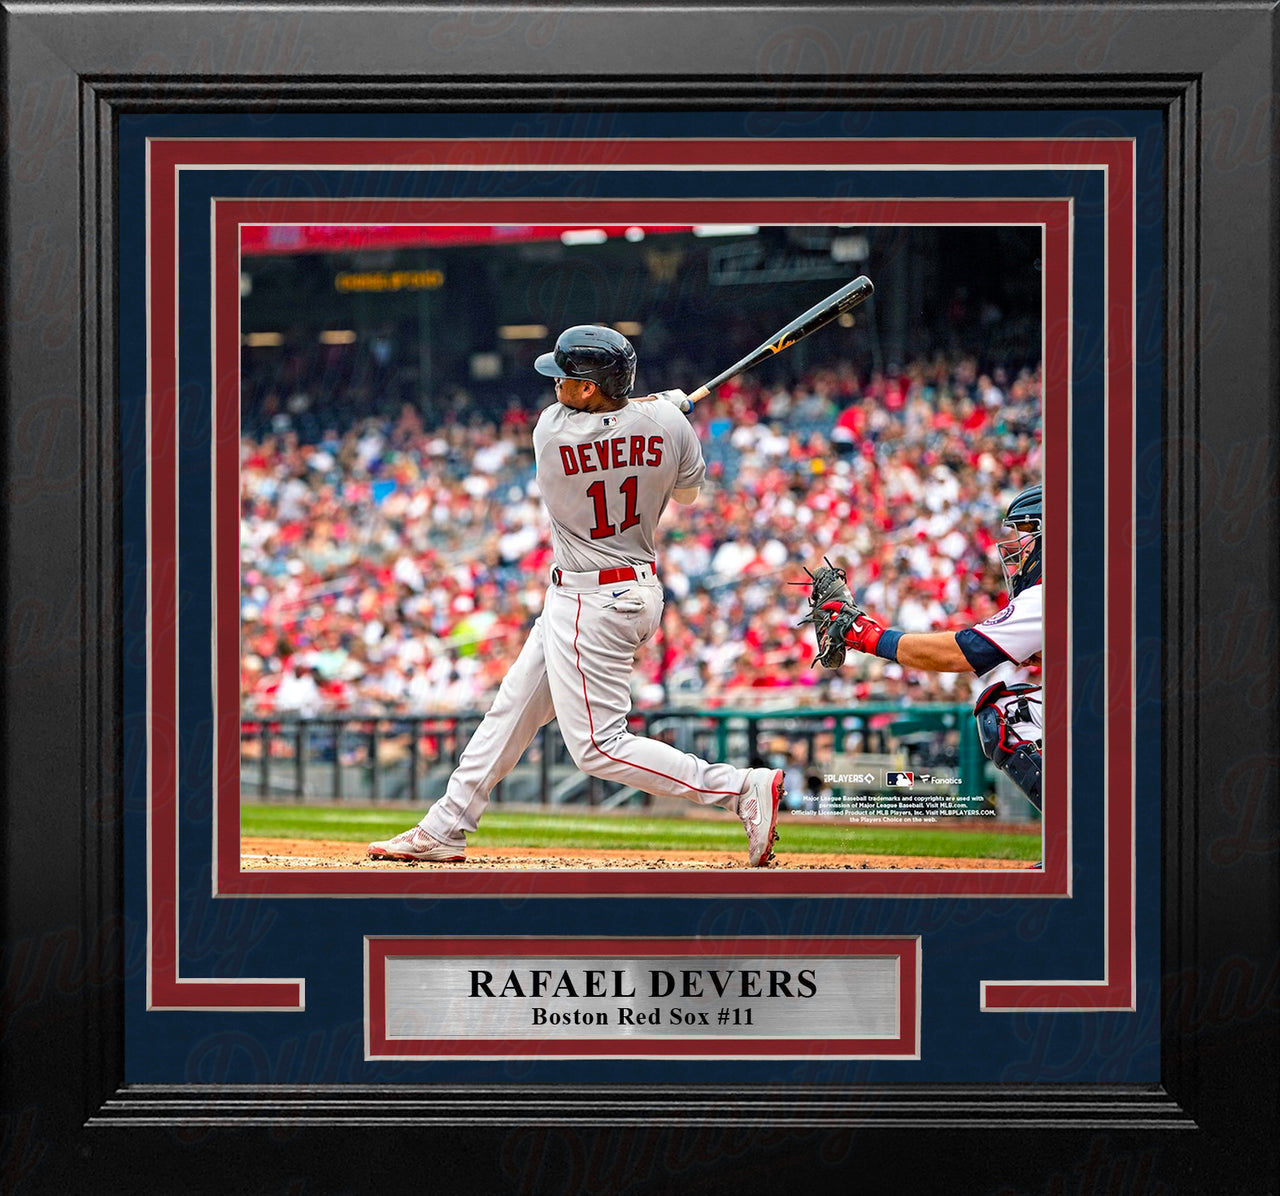 Rafael Devers in Action Boston Red Sox 8" x 10" Framed Baseball Photo - Dynasty Sports & Framing 